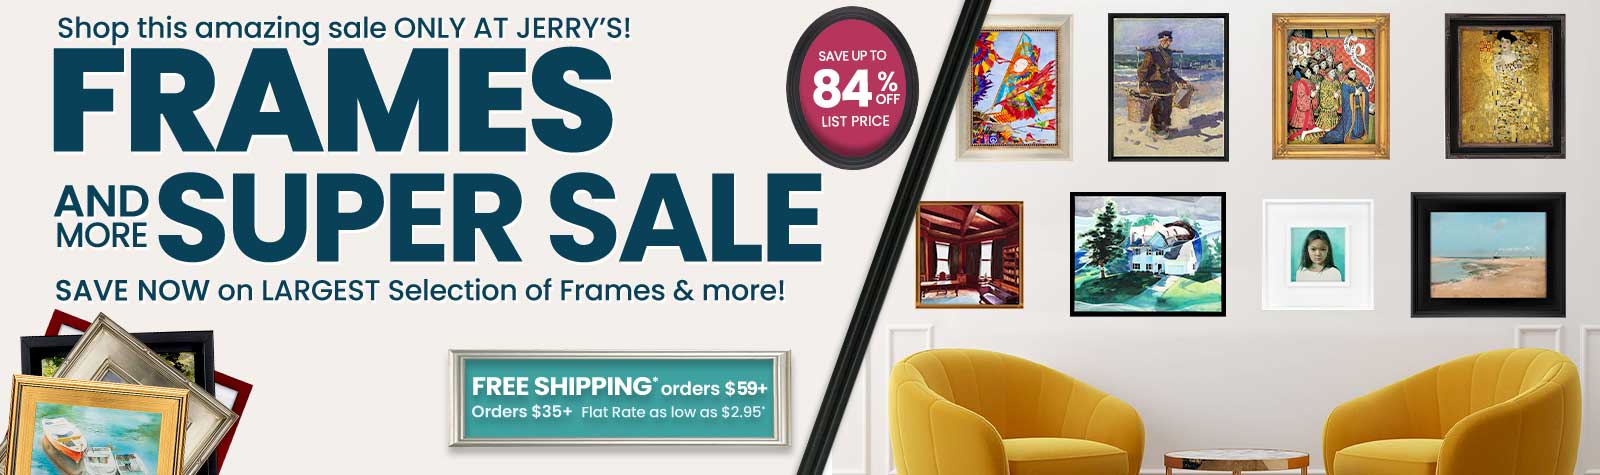 Frames and More Super Sale